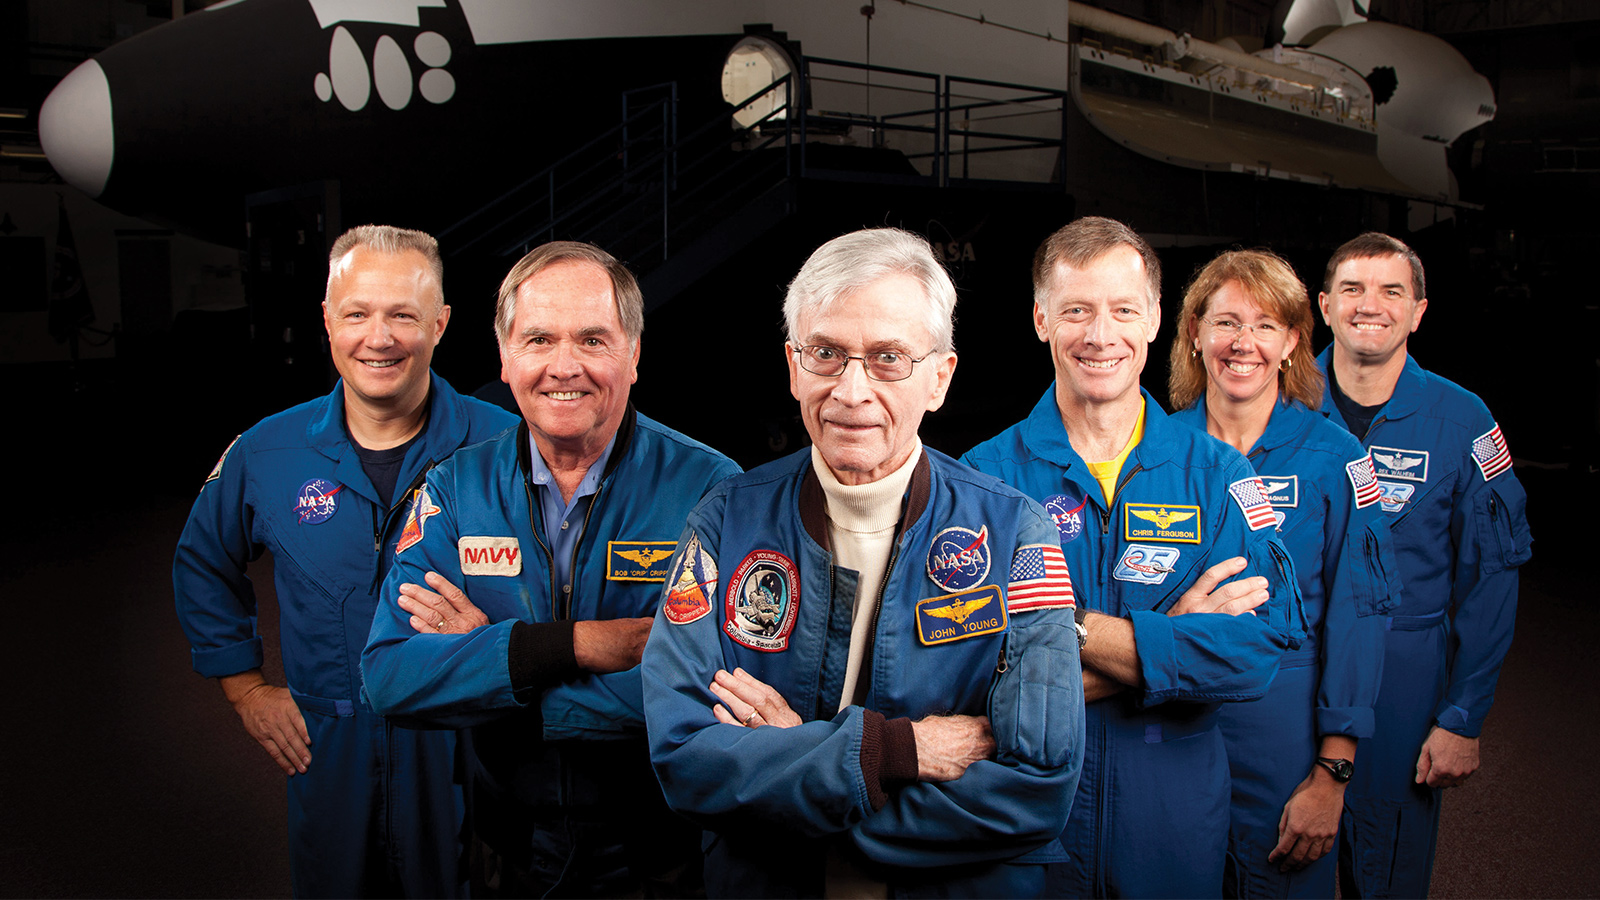 An astronaut remembers John Young - Aerospace America